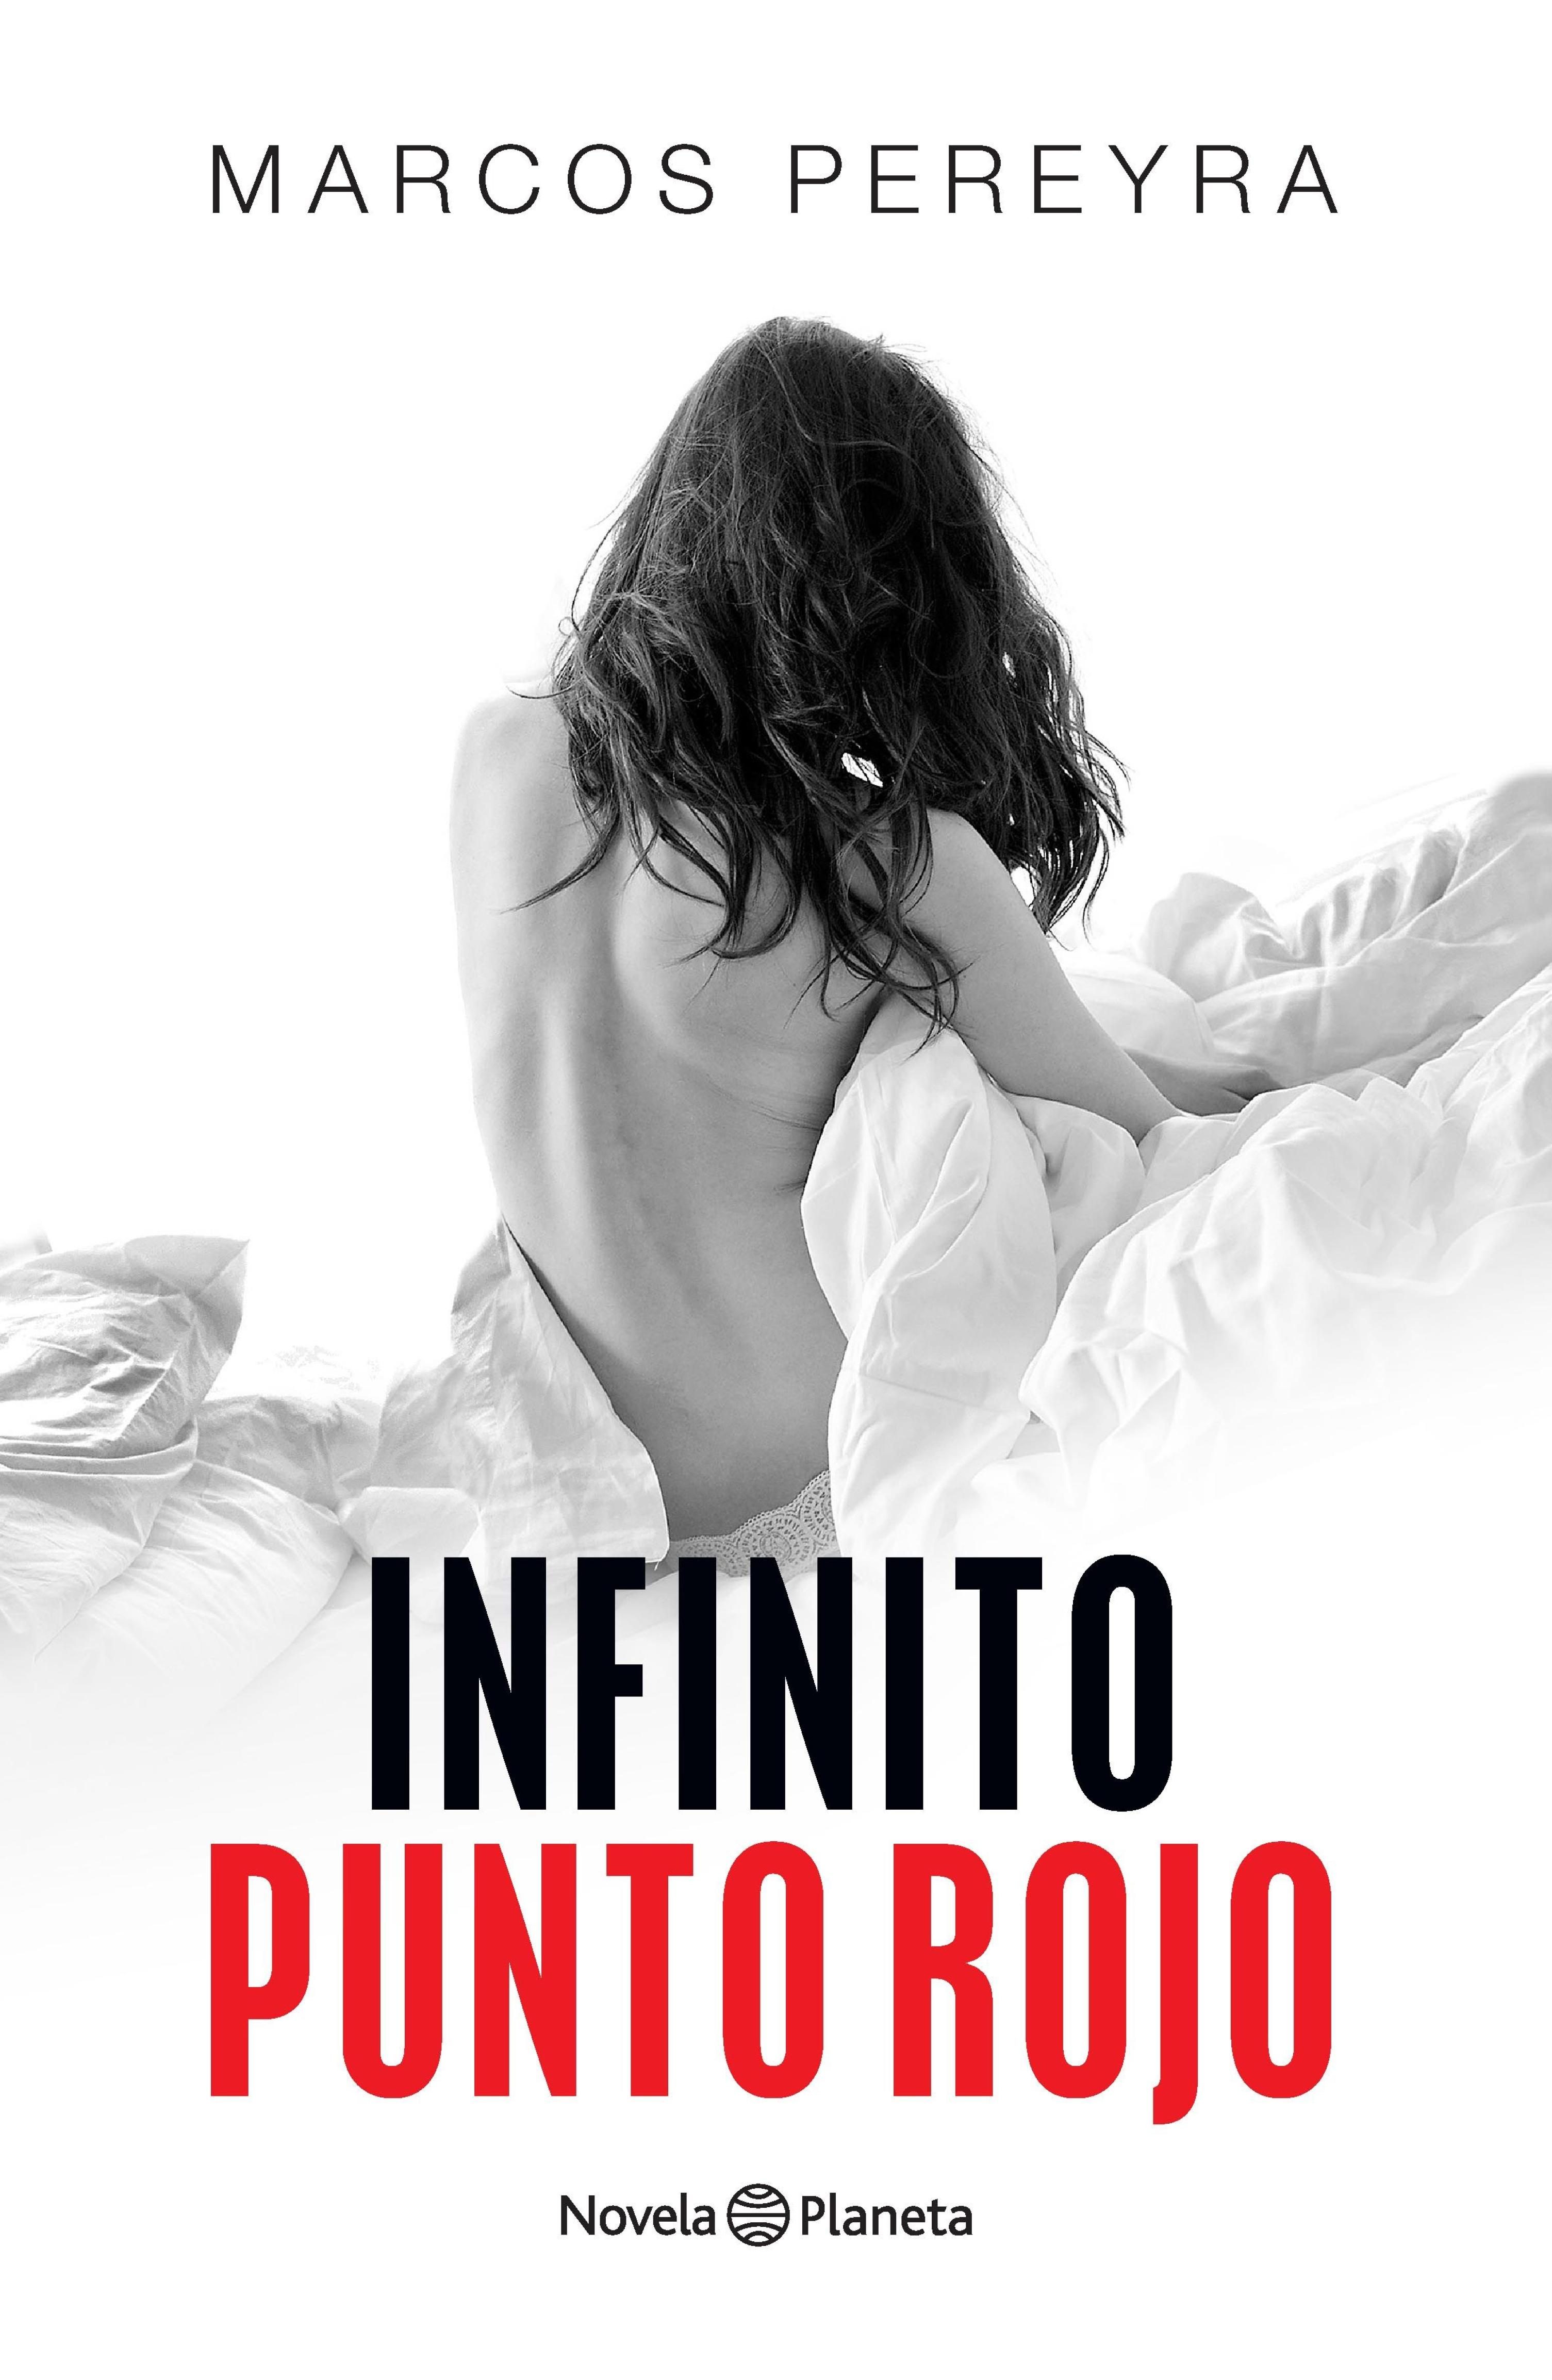 eBooks Kindle: EL PUNTO BLANCO (Spanish Edition